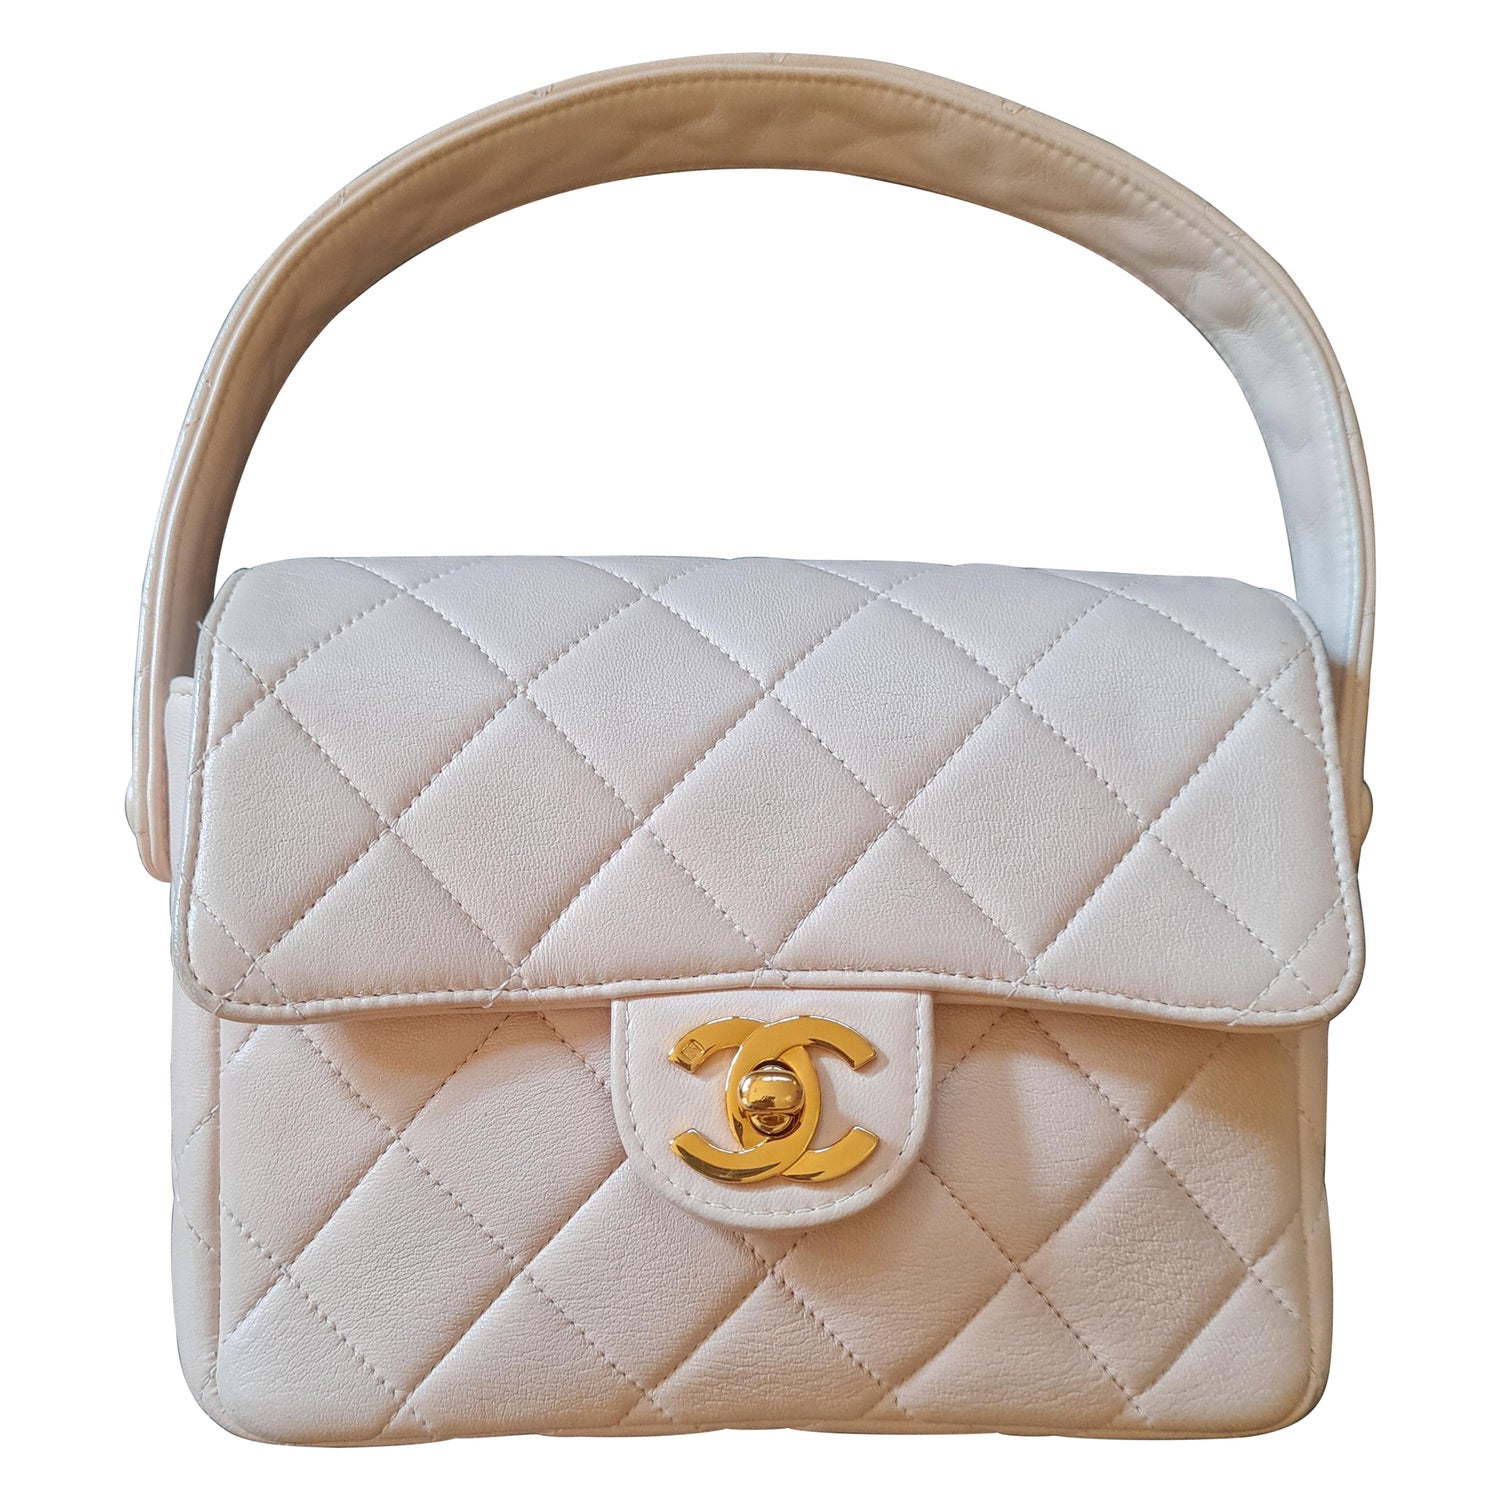 Chanel Bag Mini Kelly - 10 For Sale on 1stDibs